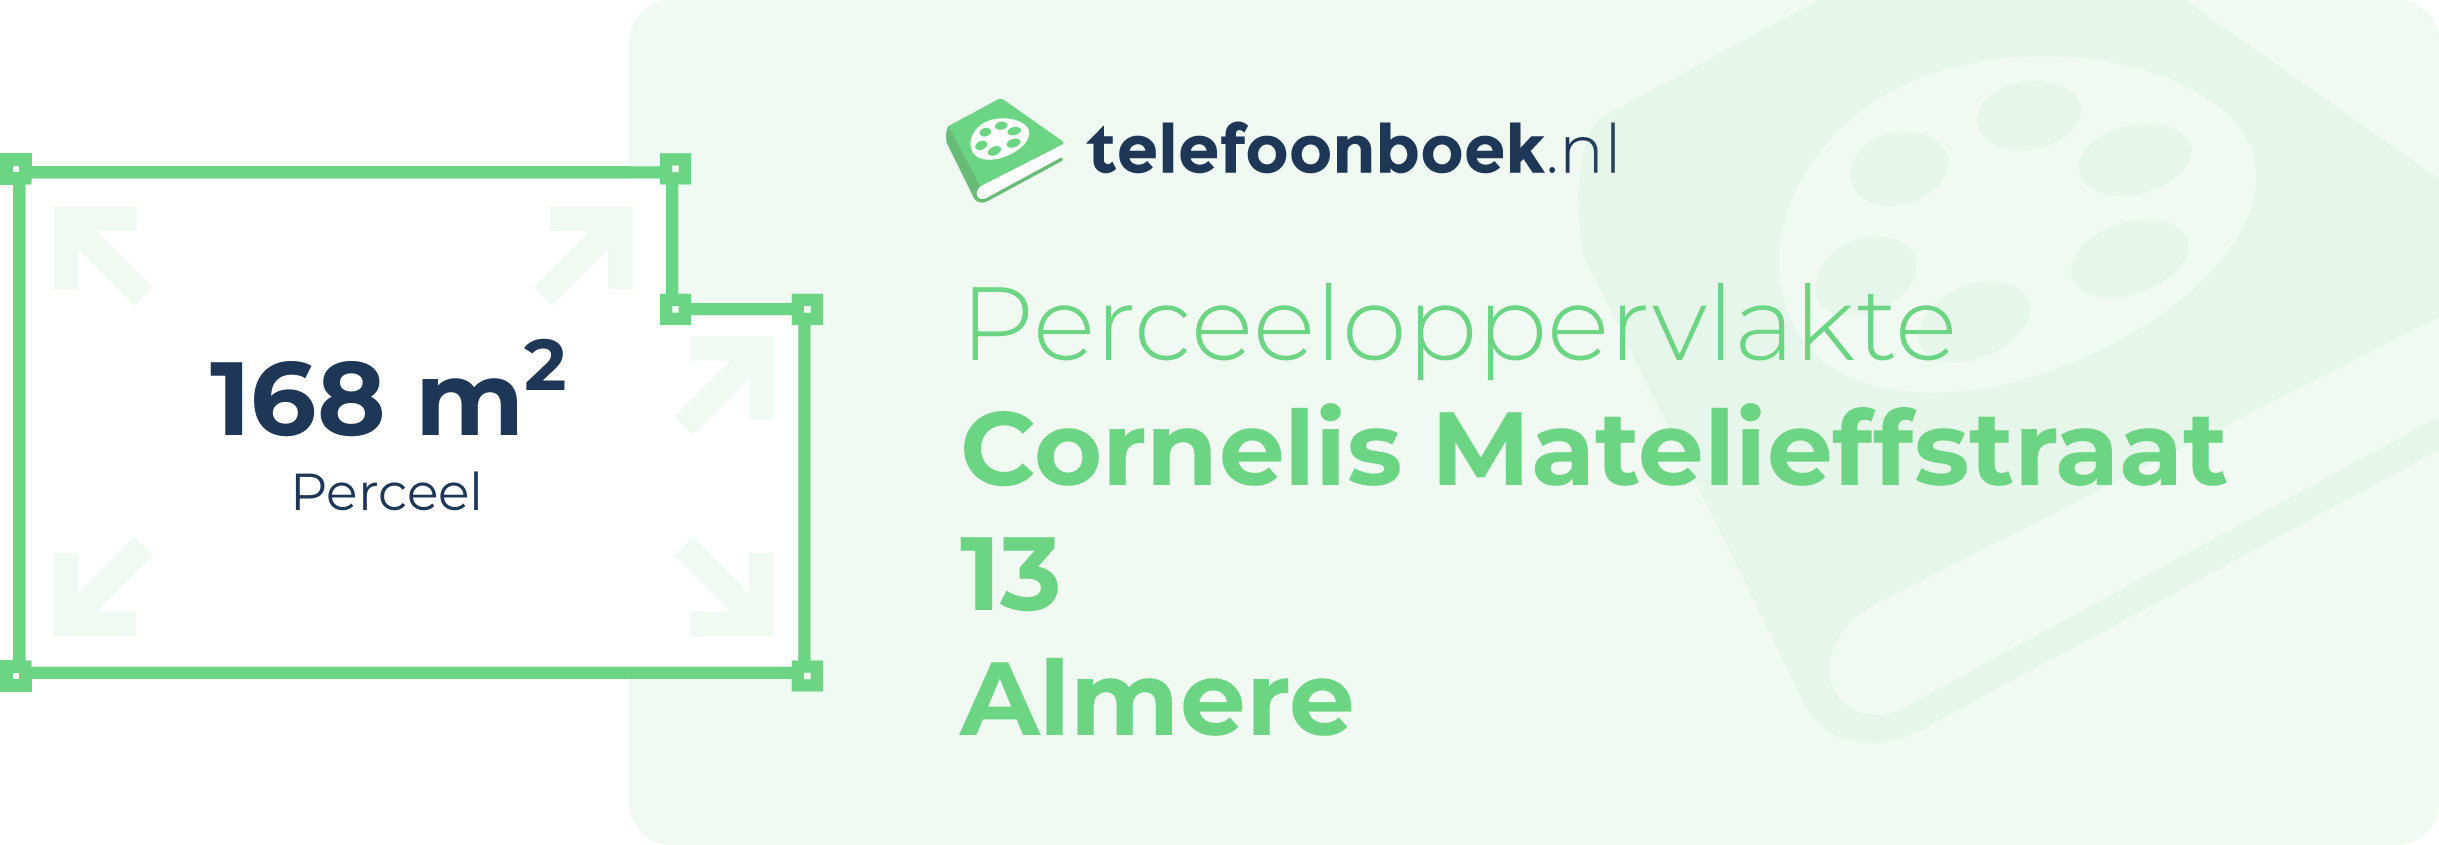 Perceeloppervlakte Cornelis Matelieffstraat 13 Almere